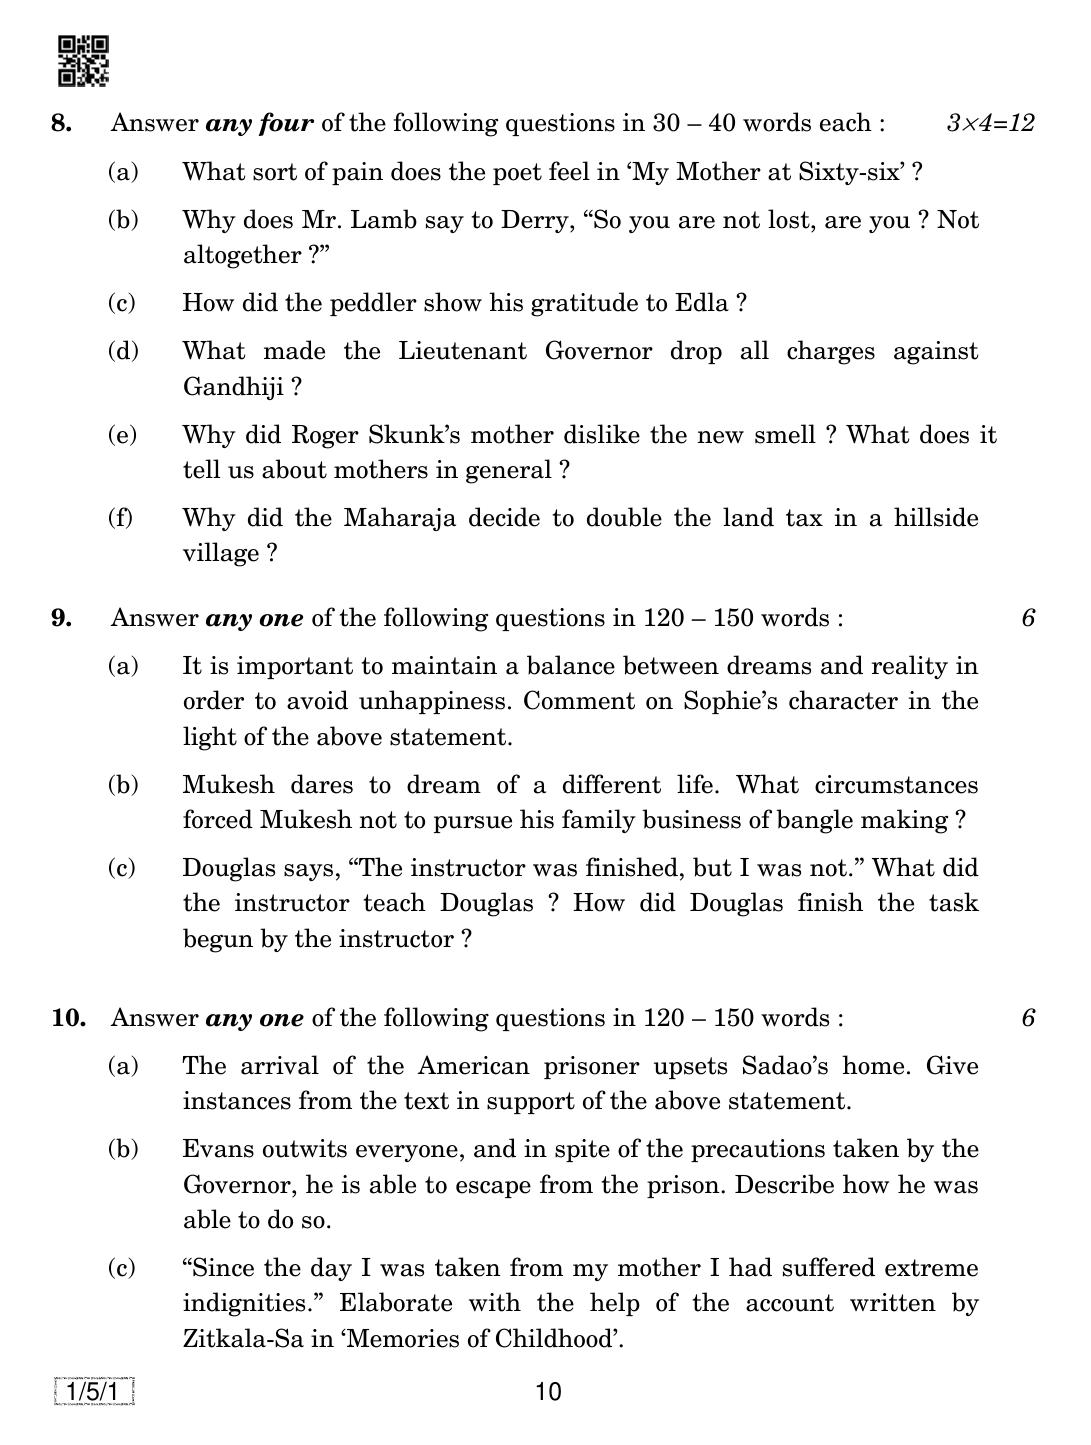 CBSE Class 12 1-5-1 English Core 2019 Question Paper - Page 10